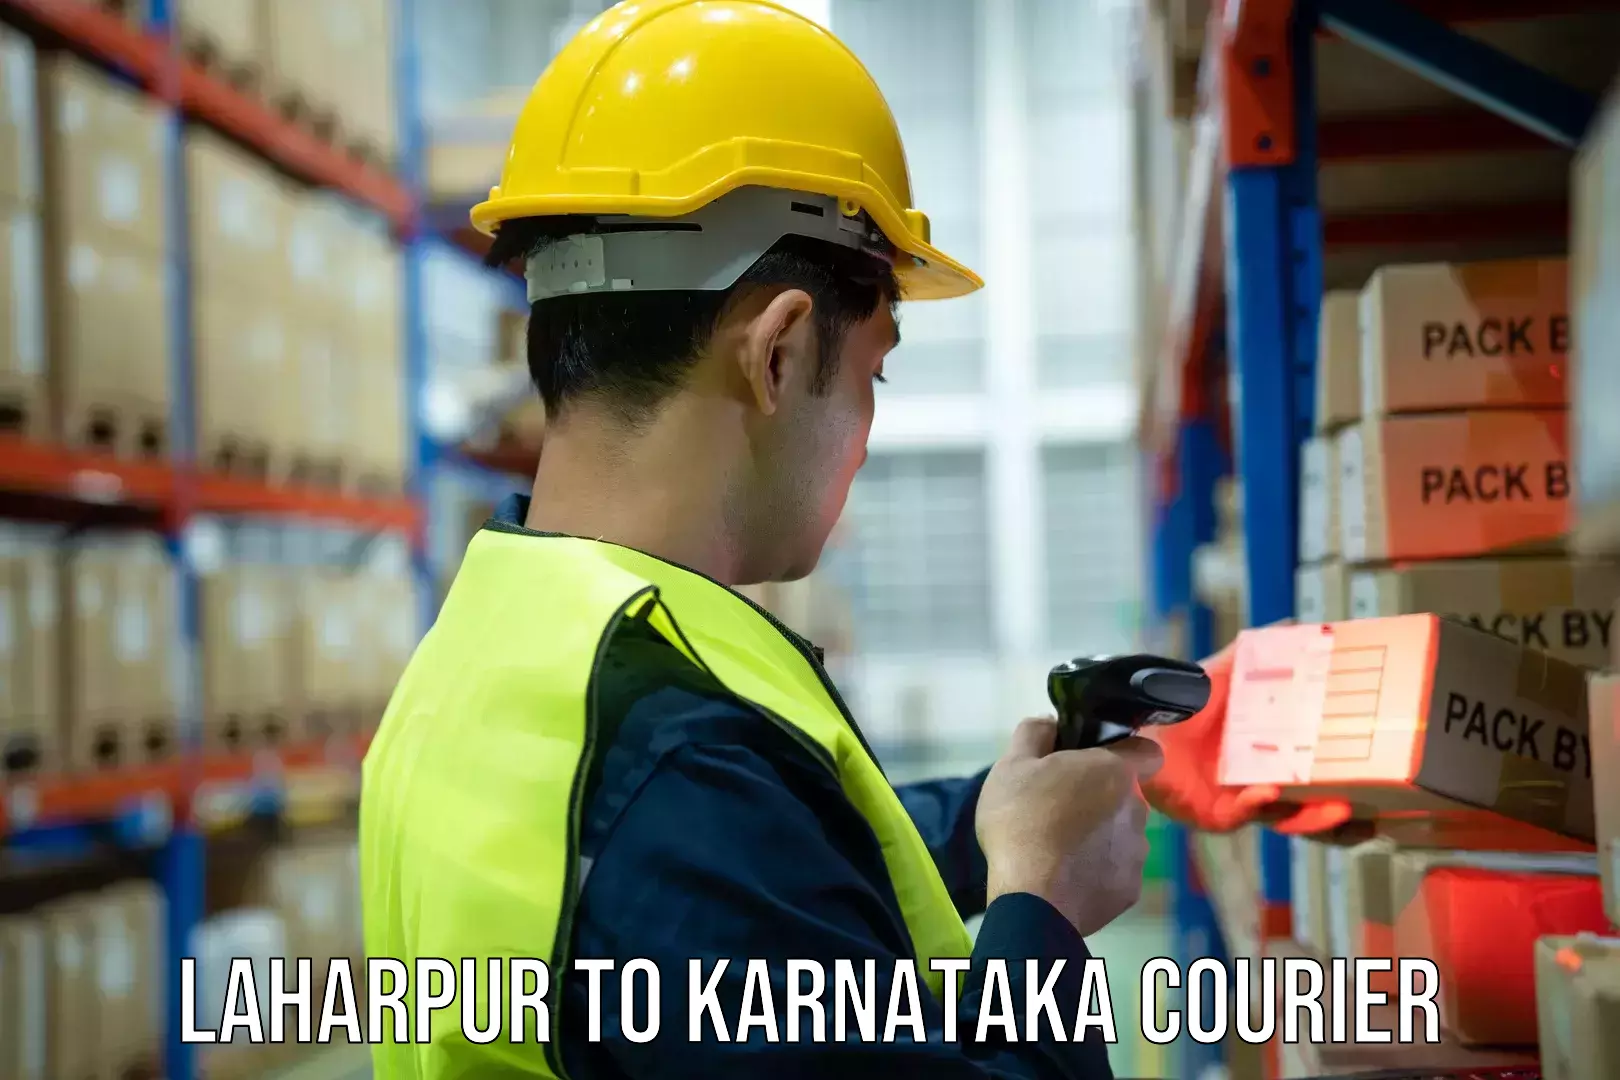 State-of-the-art courier technology Laharpur to Karnataka